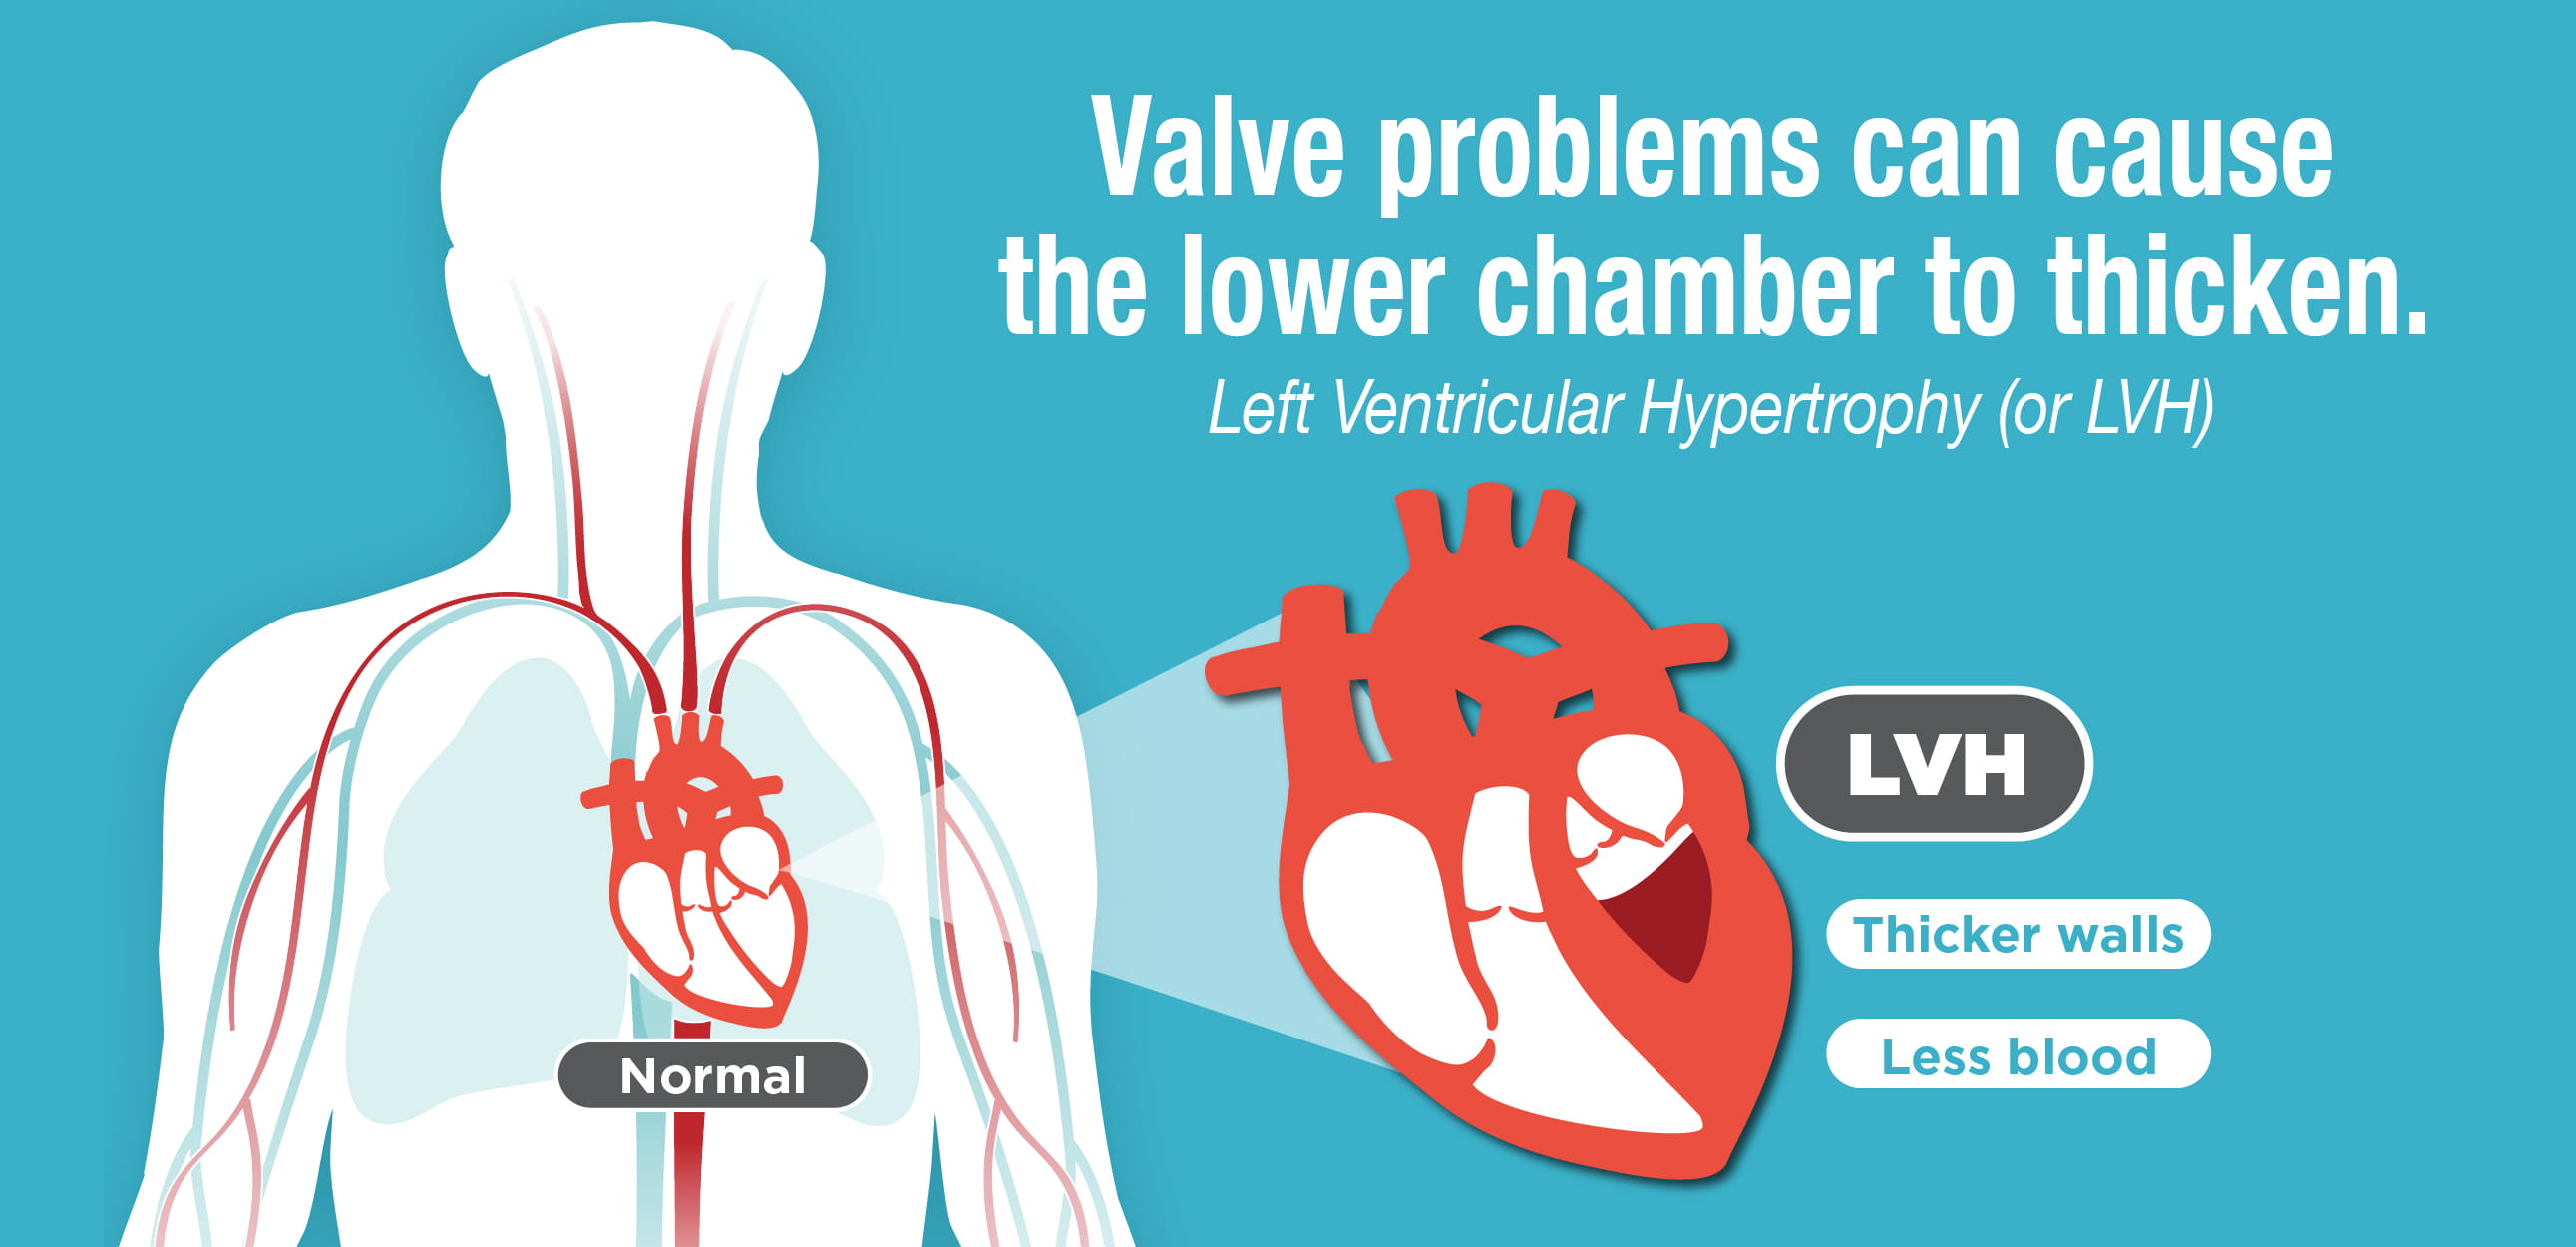 What is Left Ventricular Hypertrophy (LVH)? | American Heart Association
